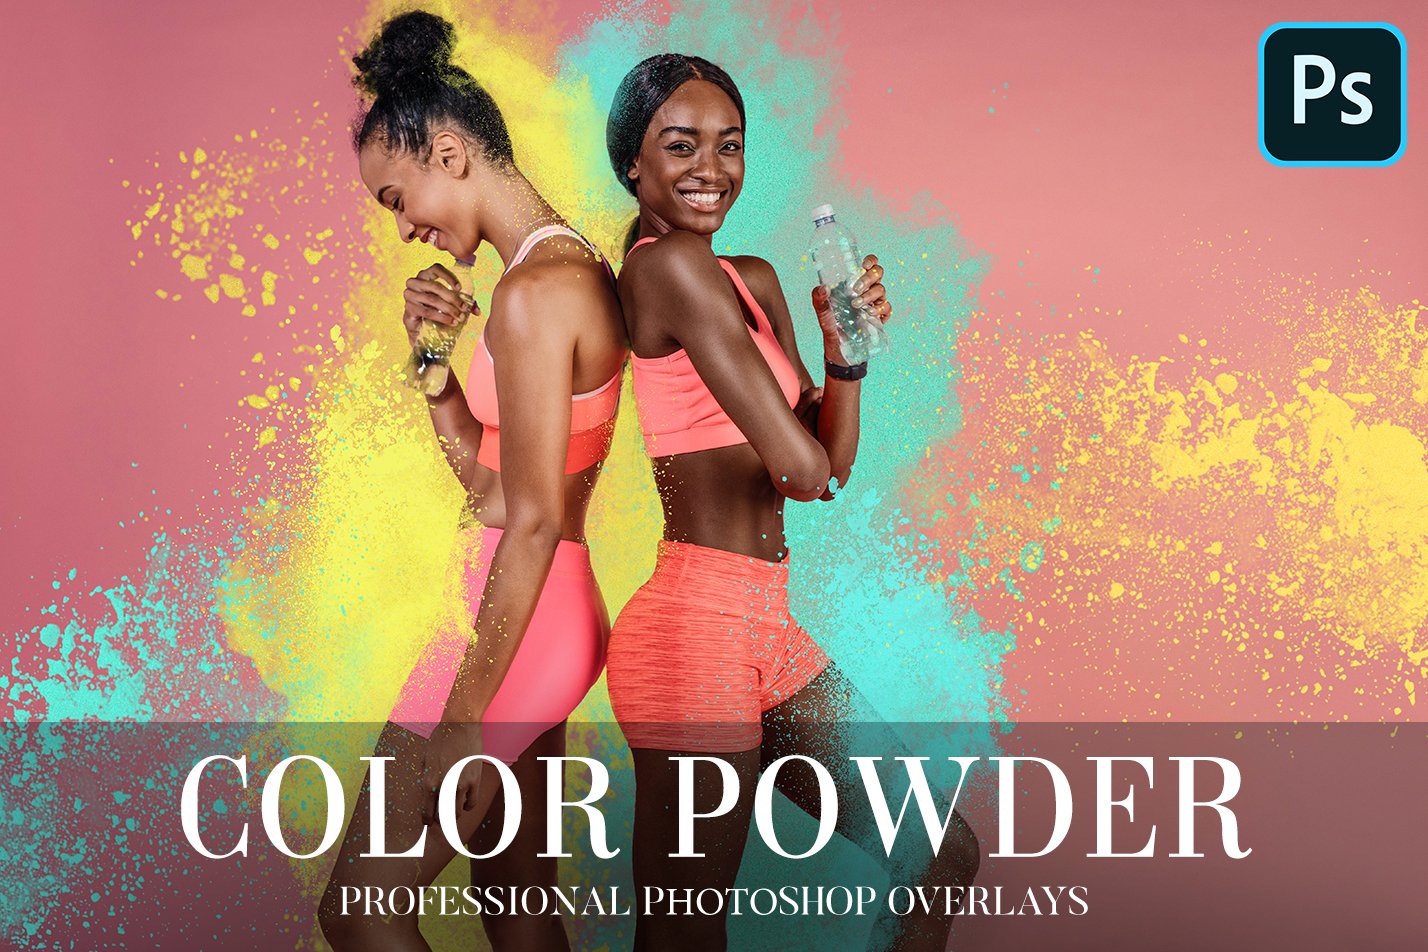 Color Powder Overlays Photoshopcover image.